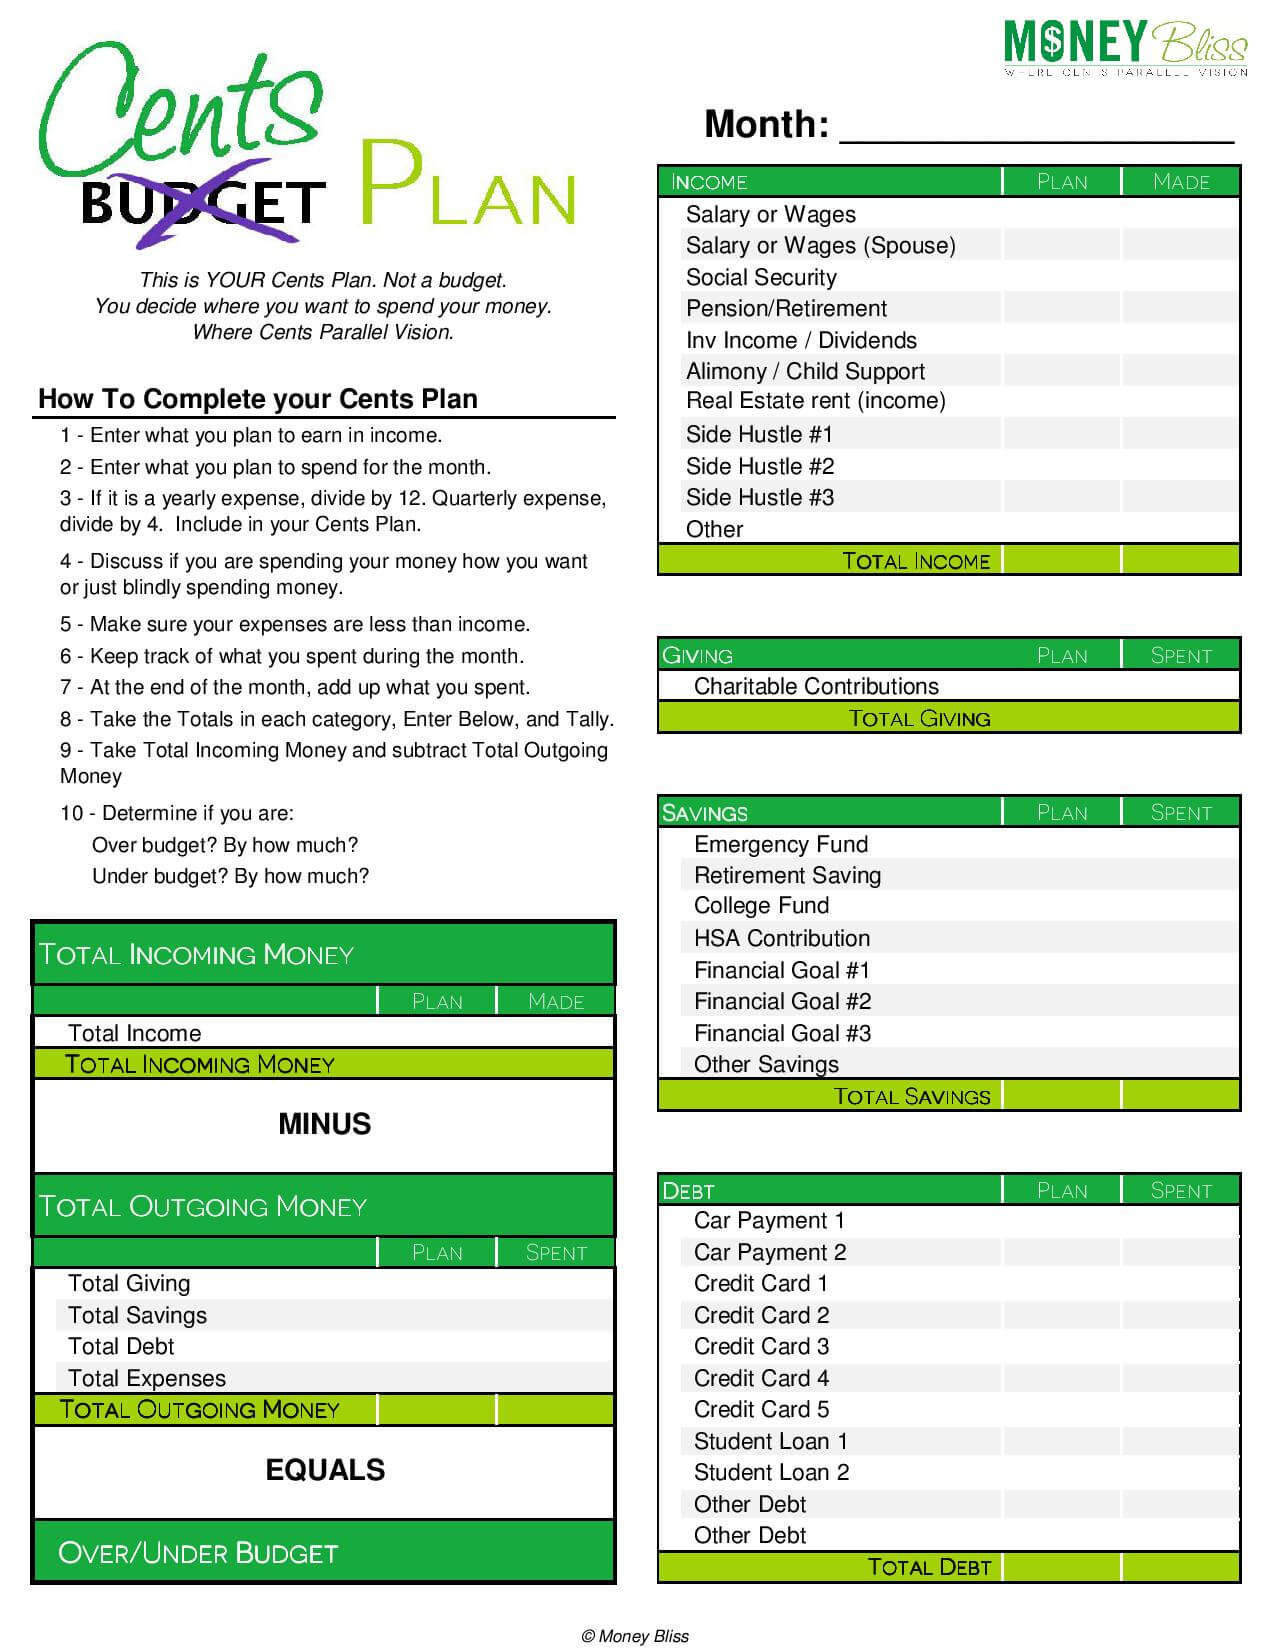 Cents Plan / Budget Worksheet – UPDATED